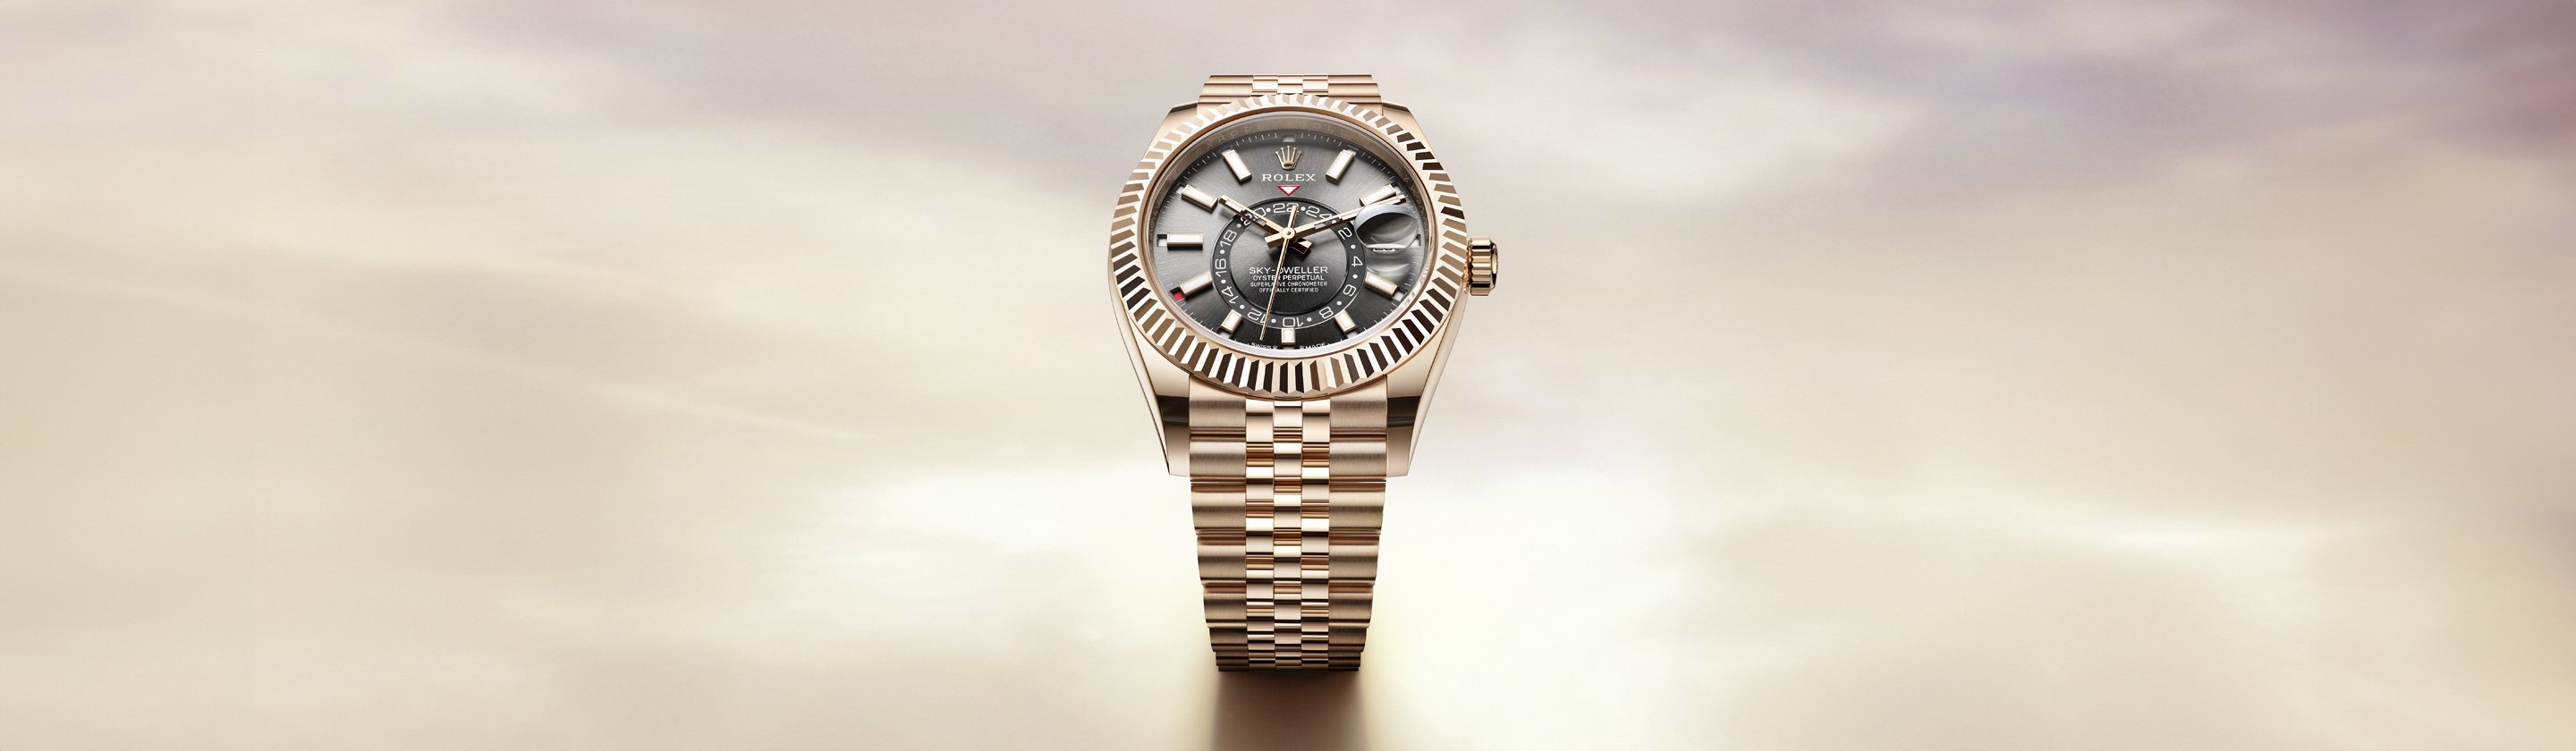 Rolex Sky-Dweller watches 